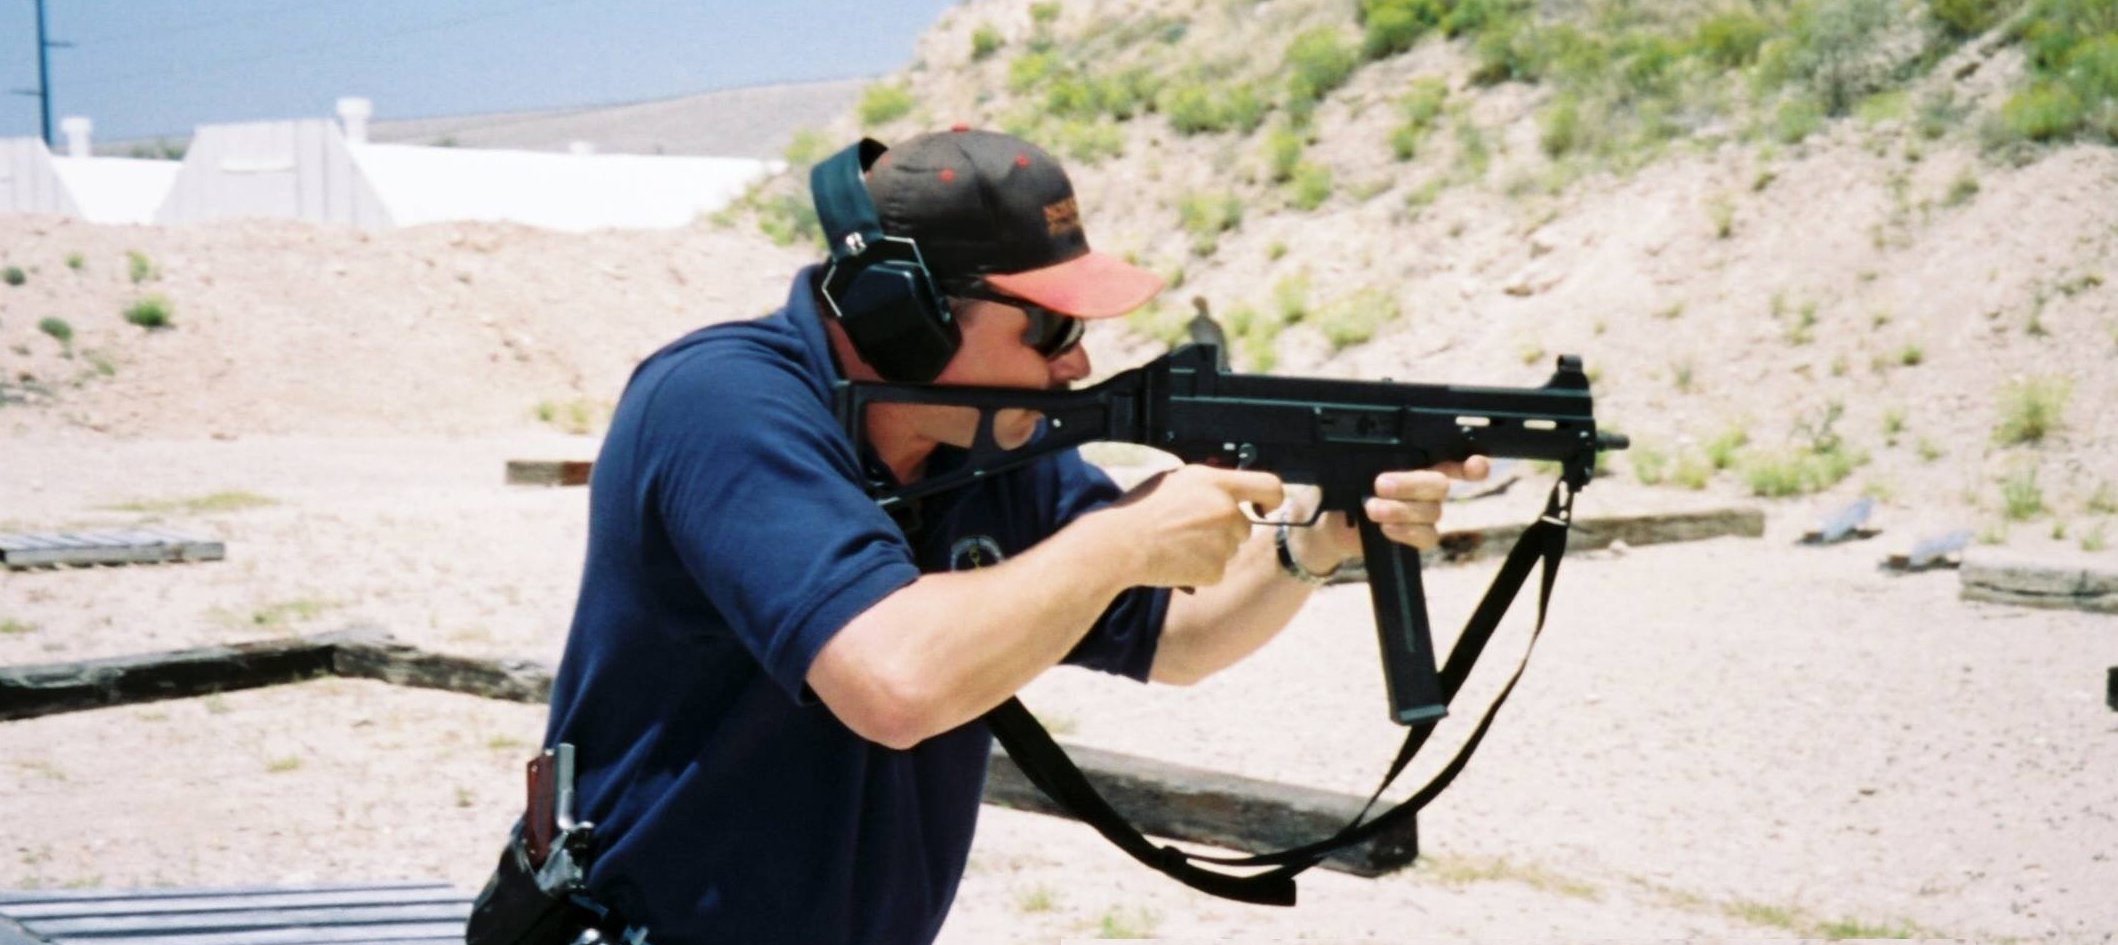 Bill Slater shooting with the U.S. Border Patrol (2005)